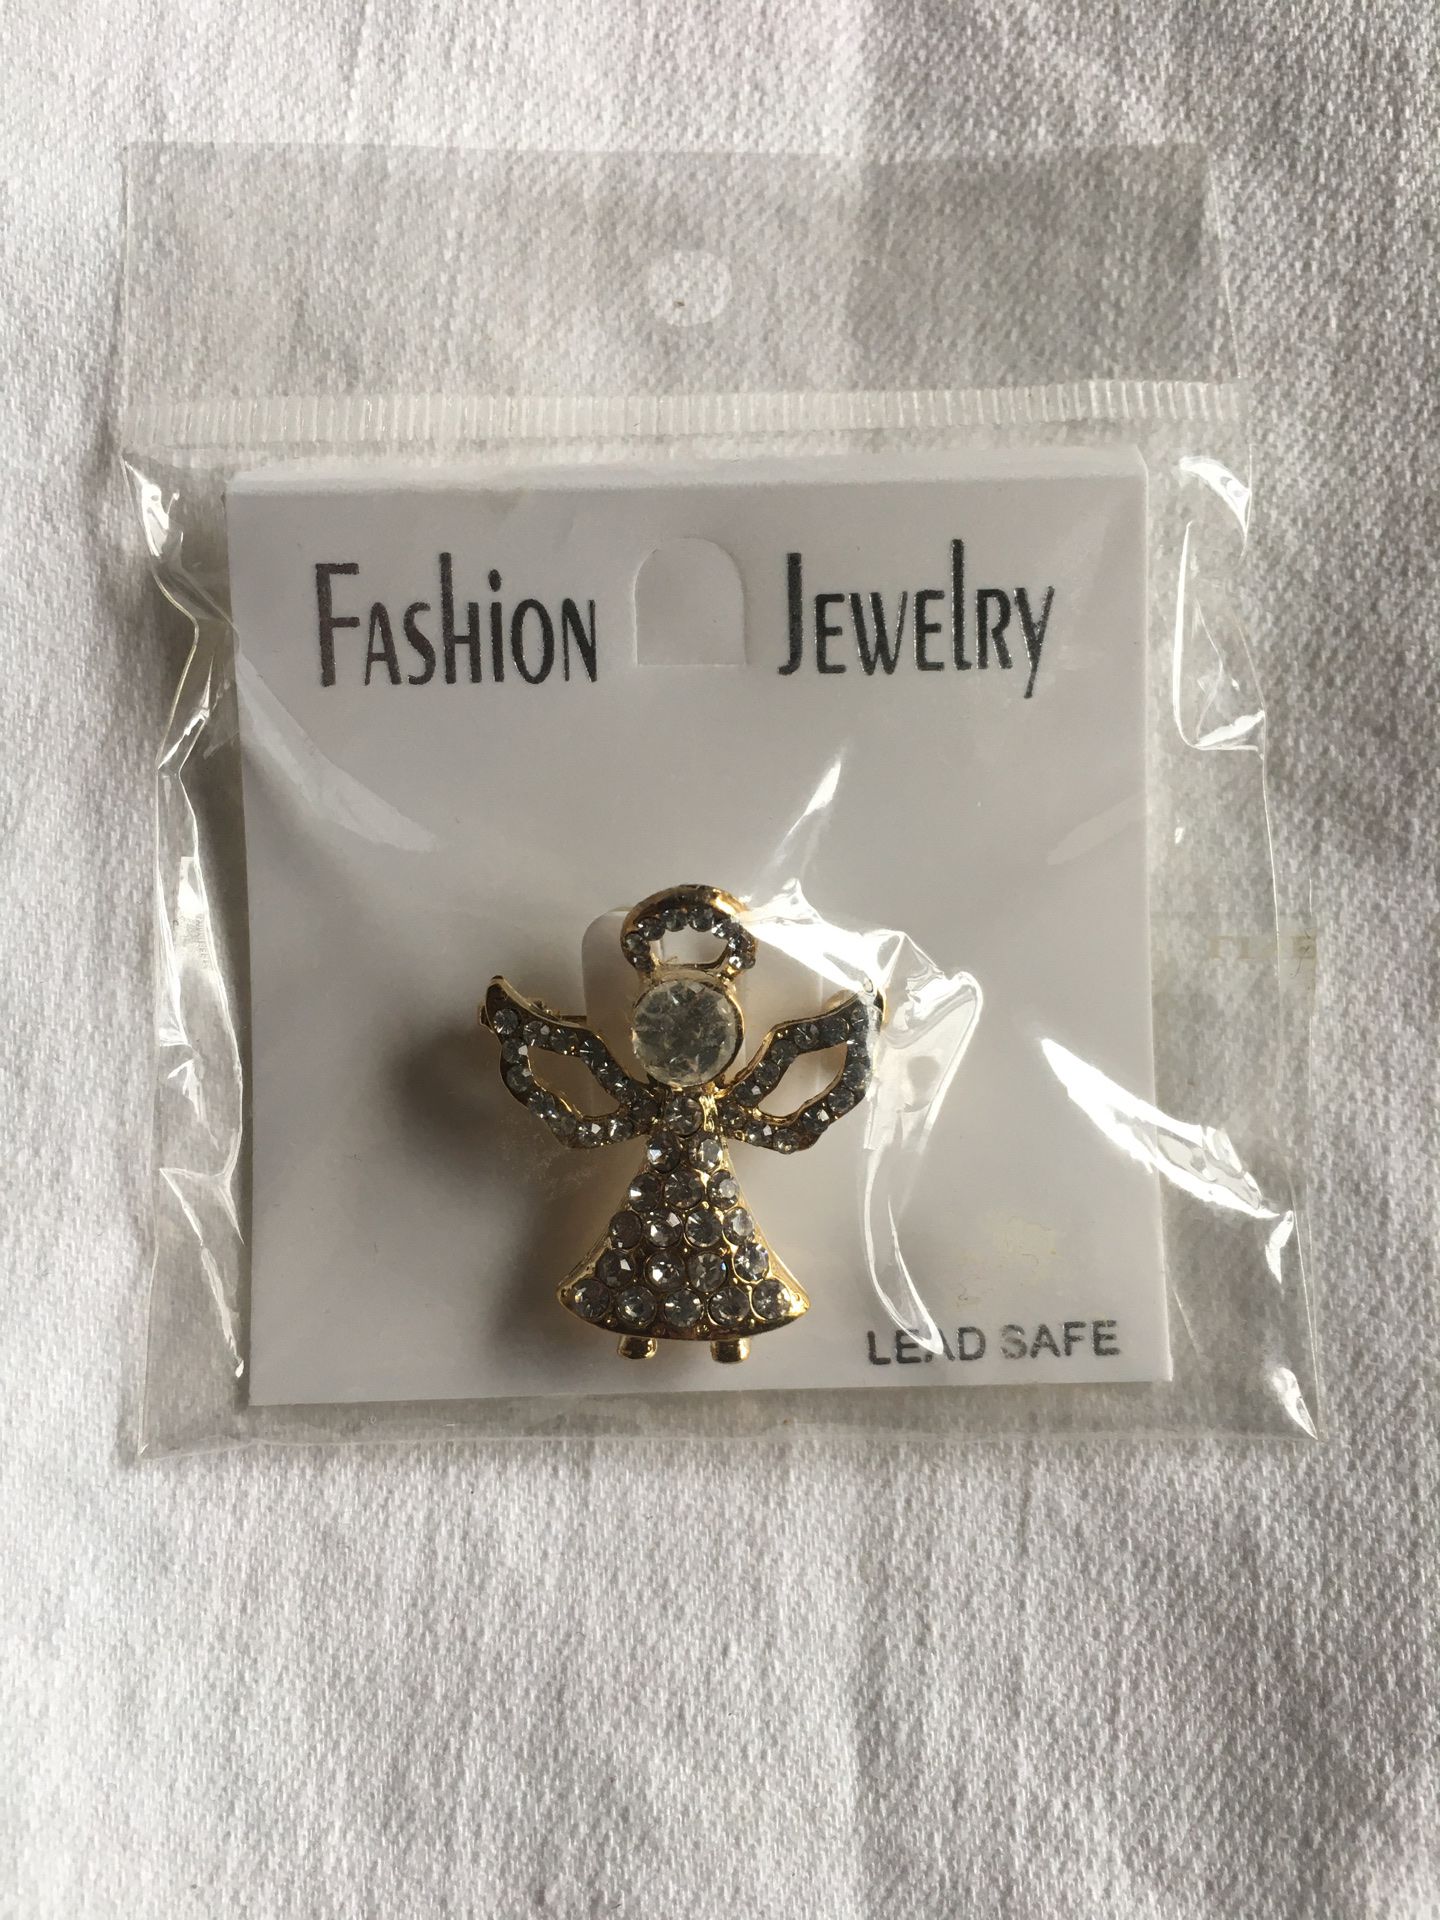 New Angel pin